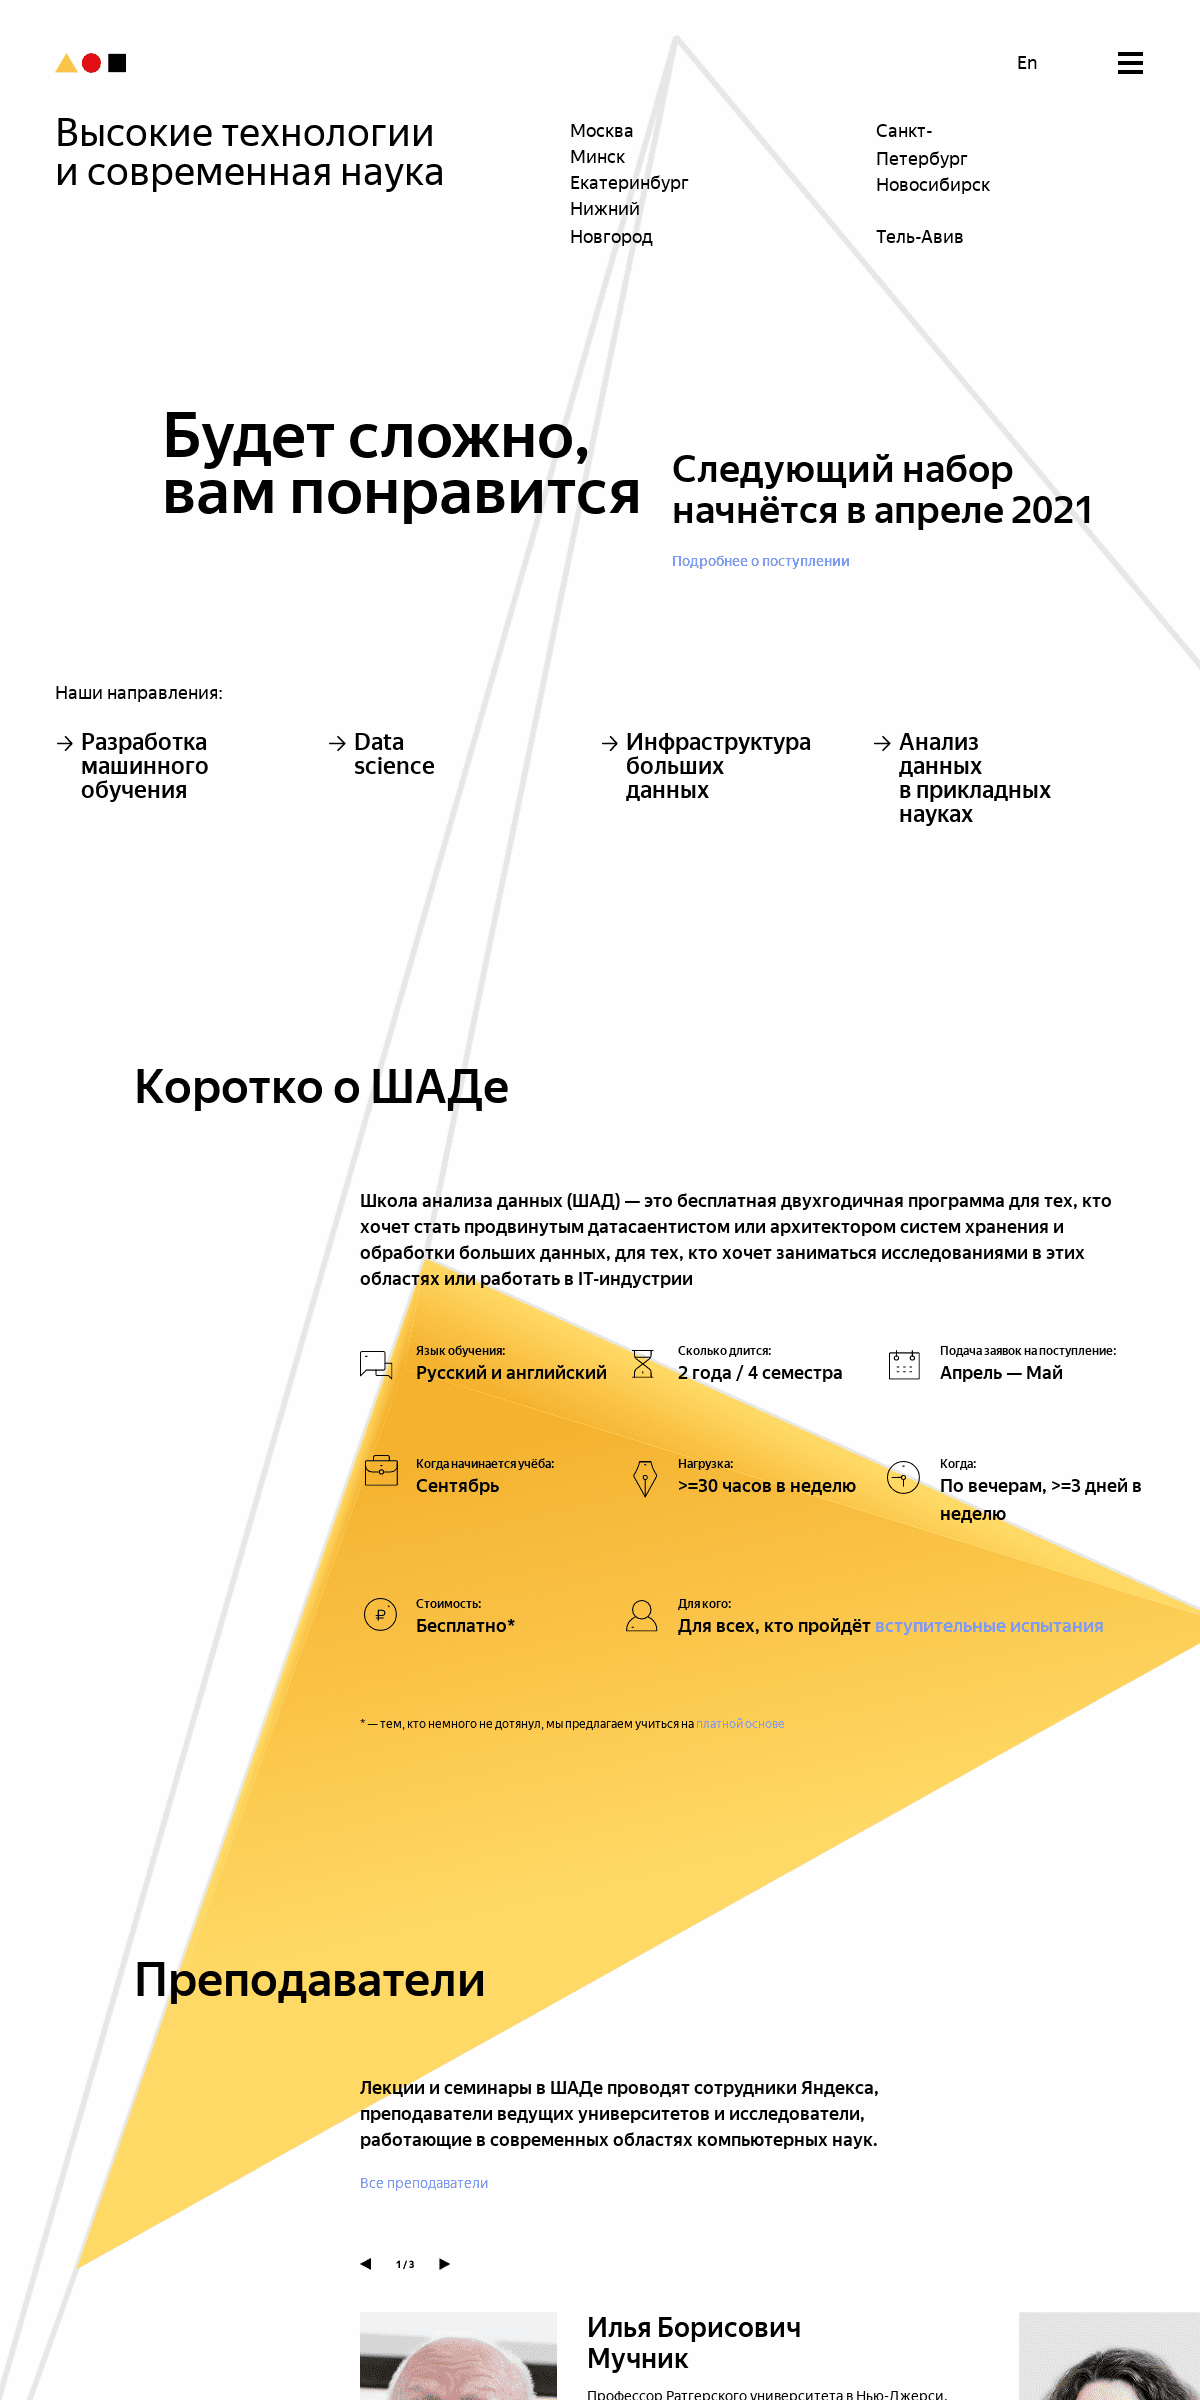 A complete backup of yandexdataschool.ru